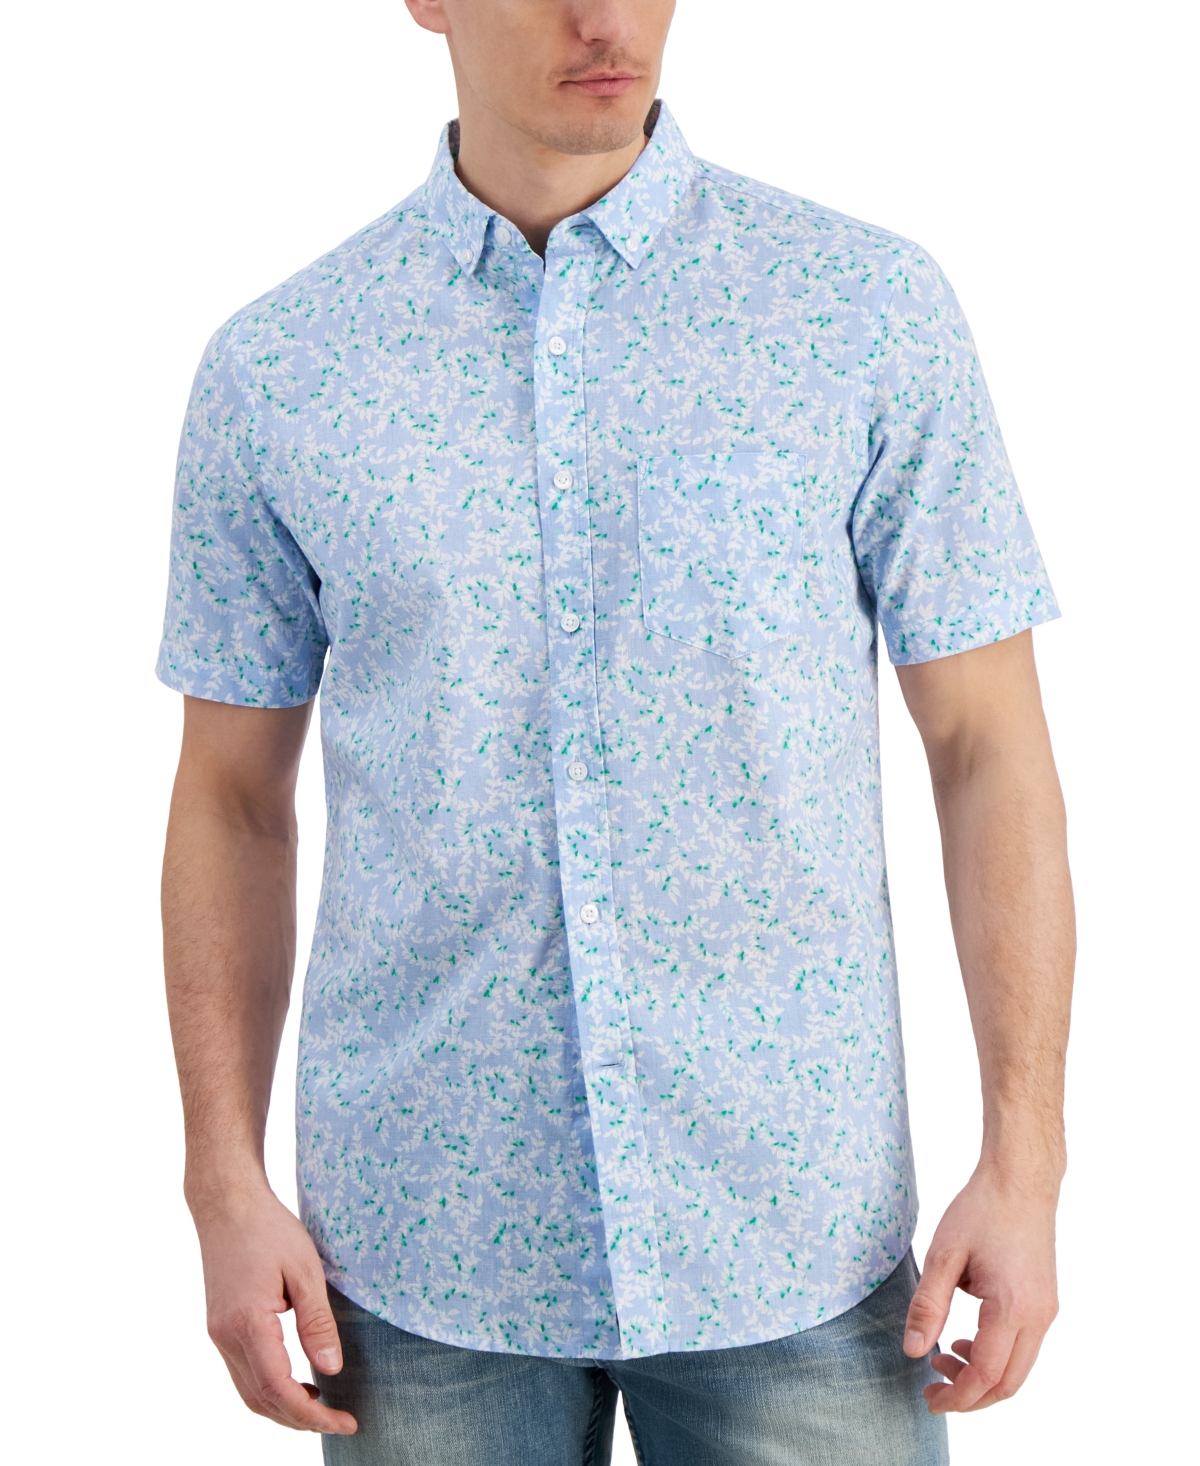 Men's Vine Patterned Short-Sleeve Shirt, Created for Macy's - Pale Ink Blue